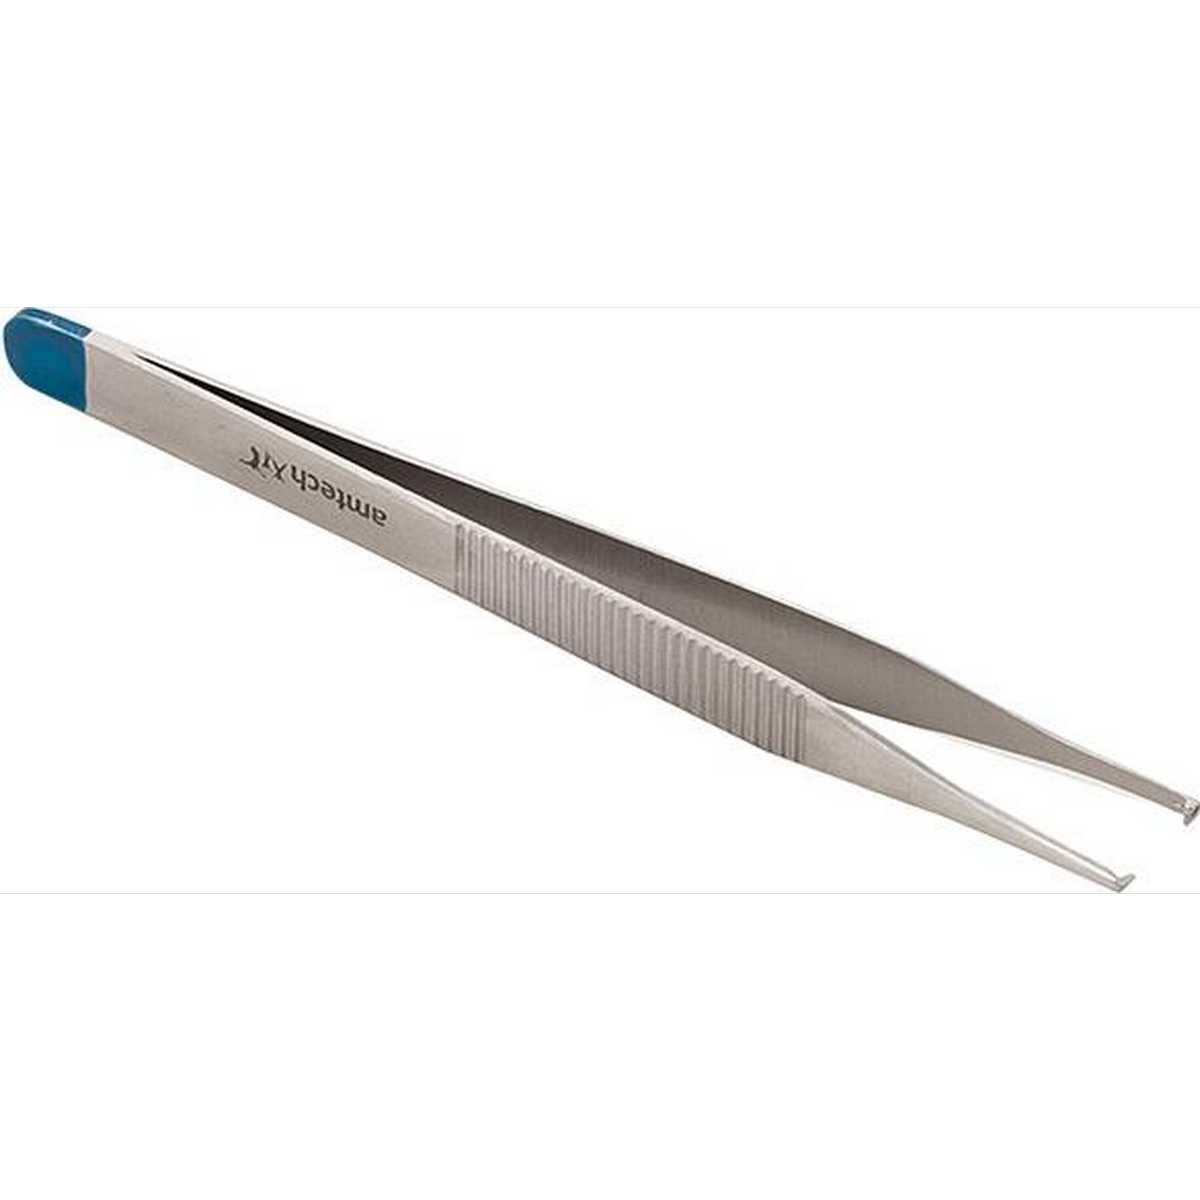 Single-use tweezers, blue